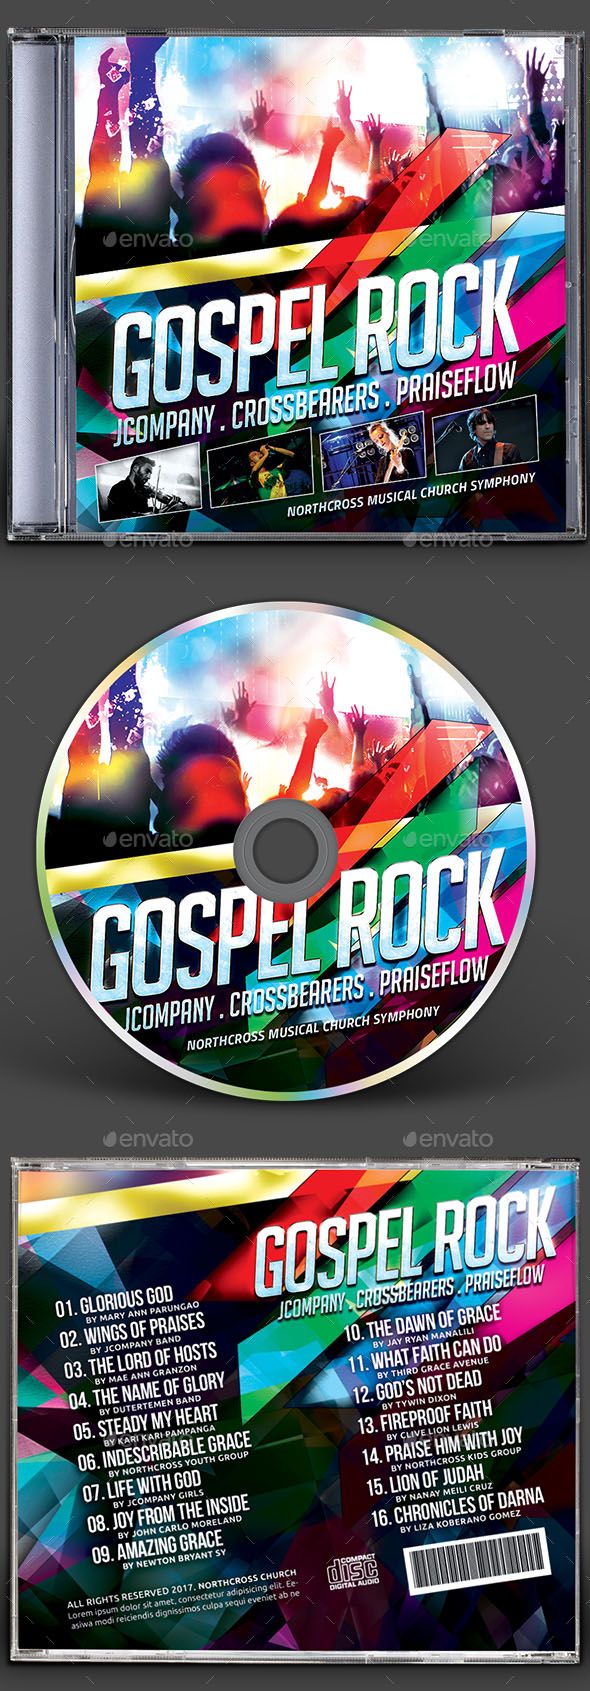 Premium Gospel Rock CDAlbum Artwork